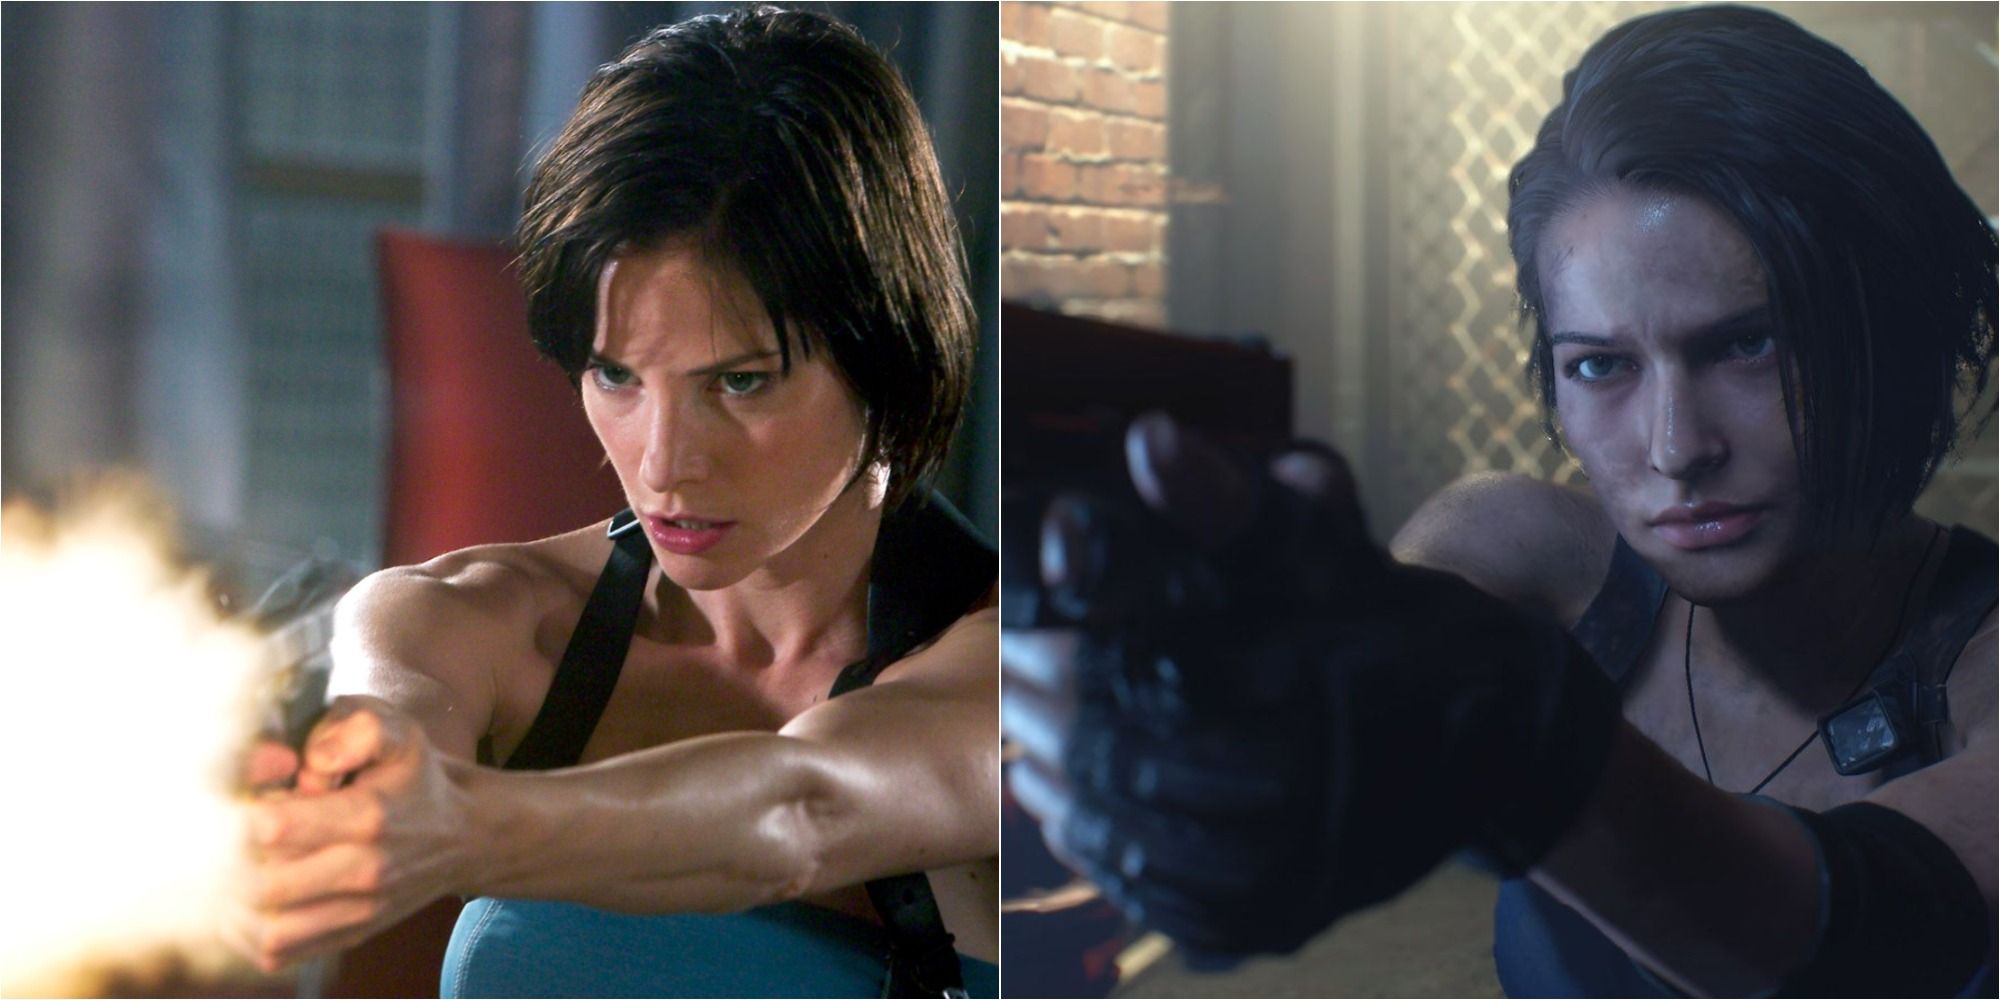 Resident Evil Jill Valentine Split Image Live-Action Movie And Game